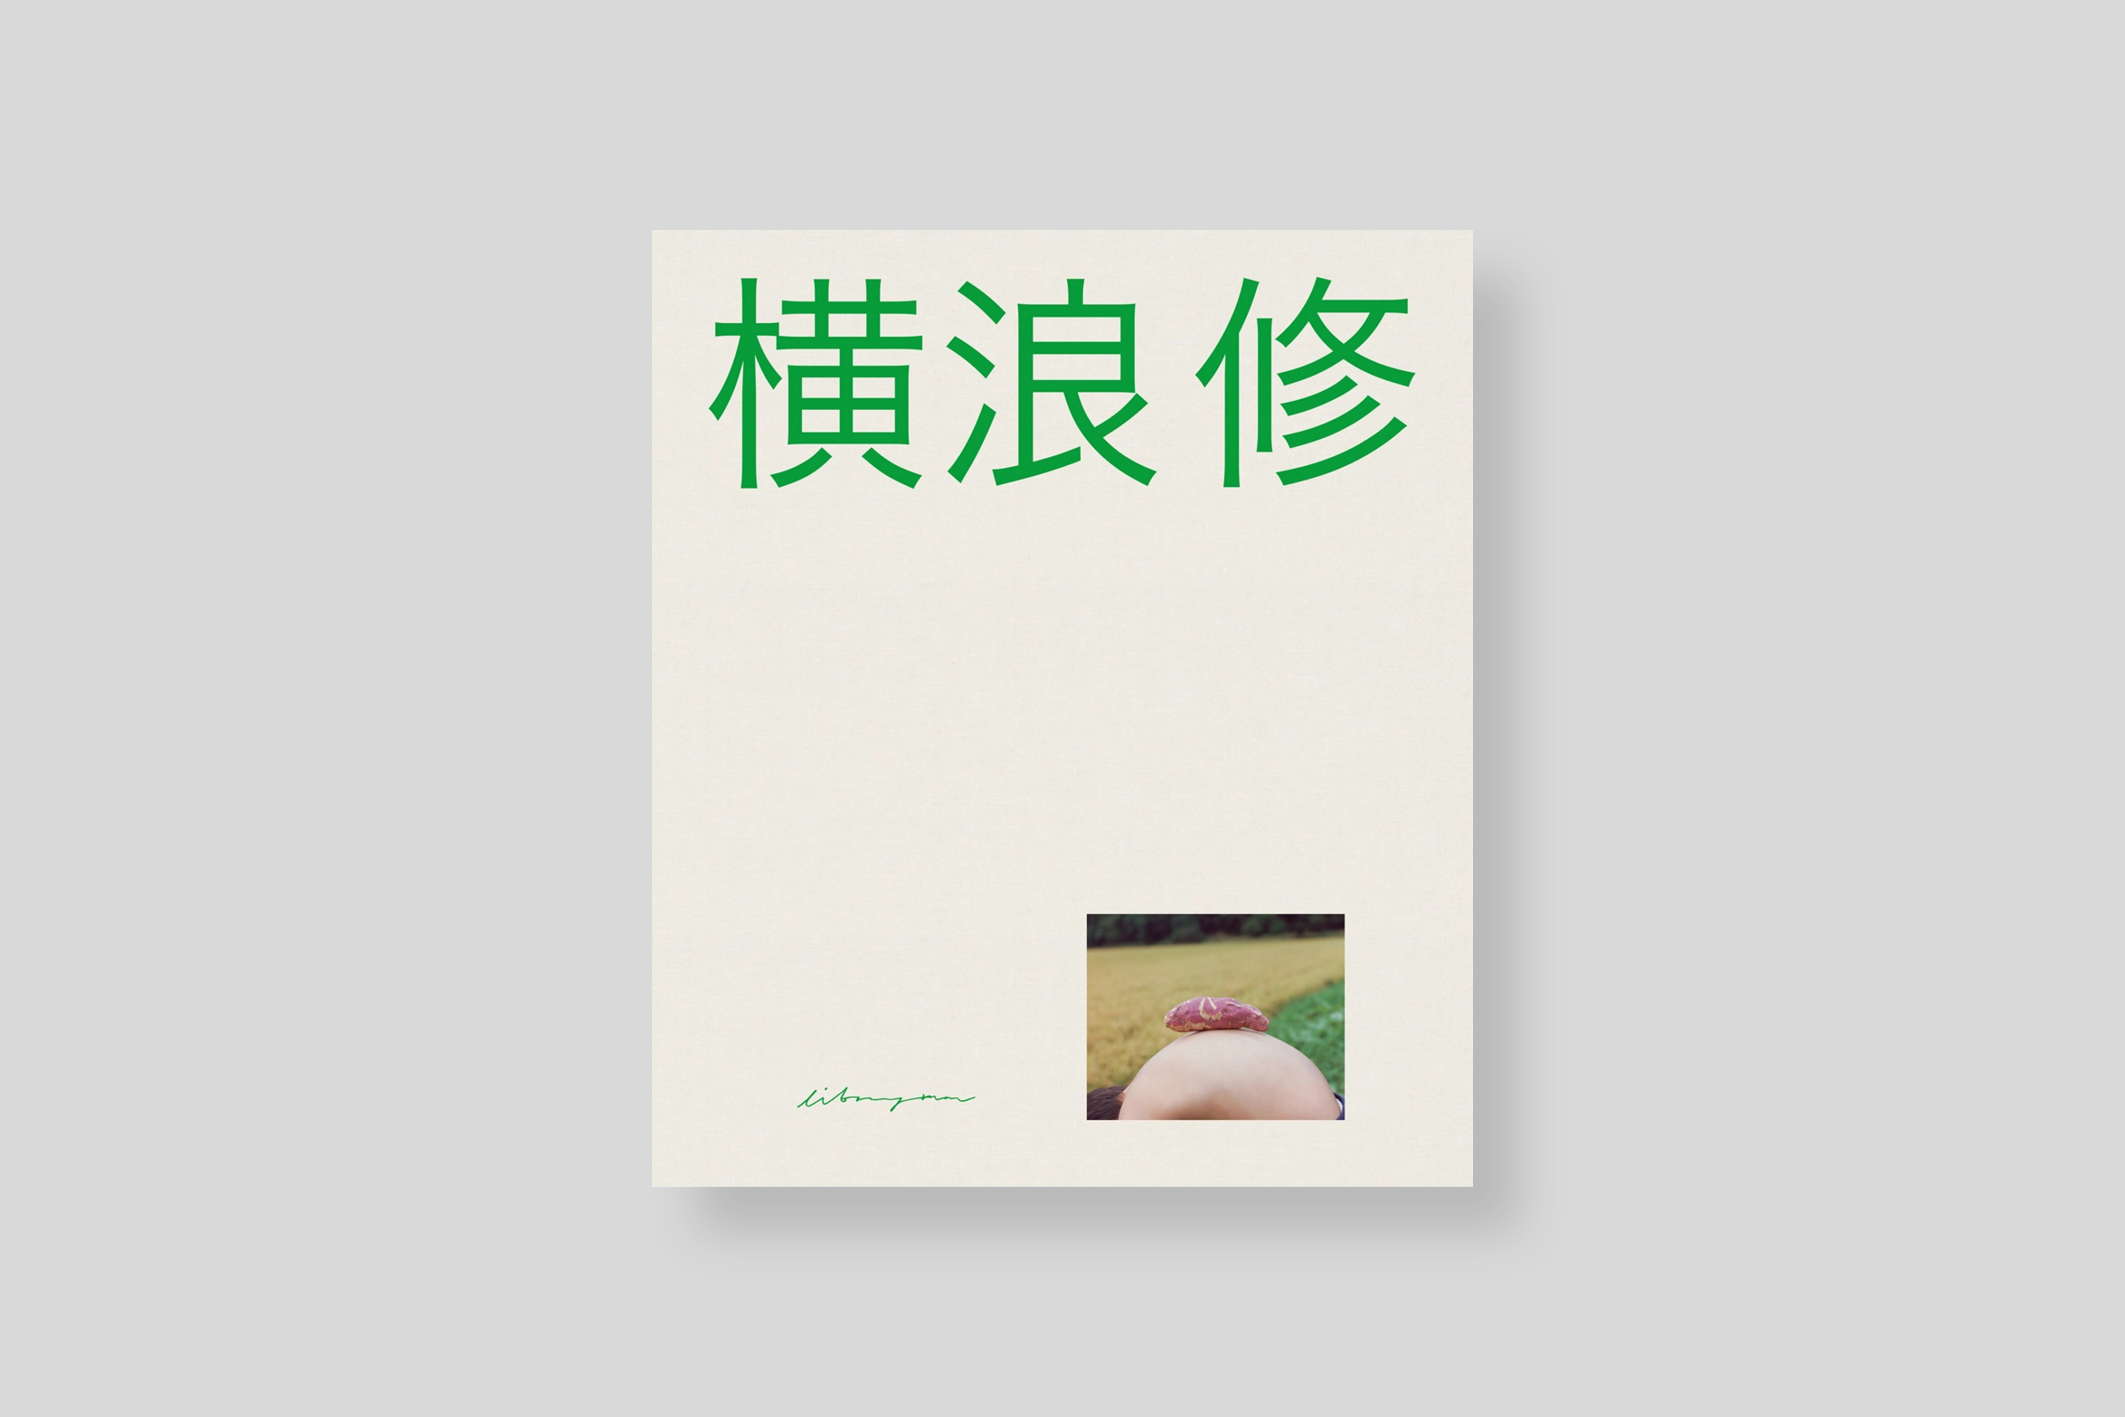 small-town-yokonami-libraryman-cover